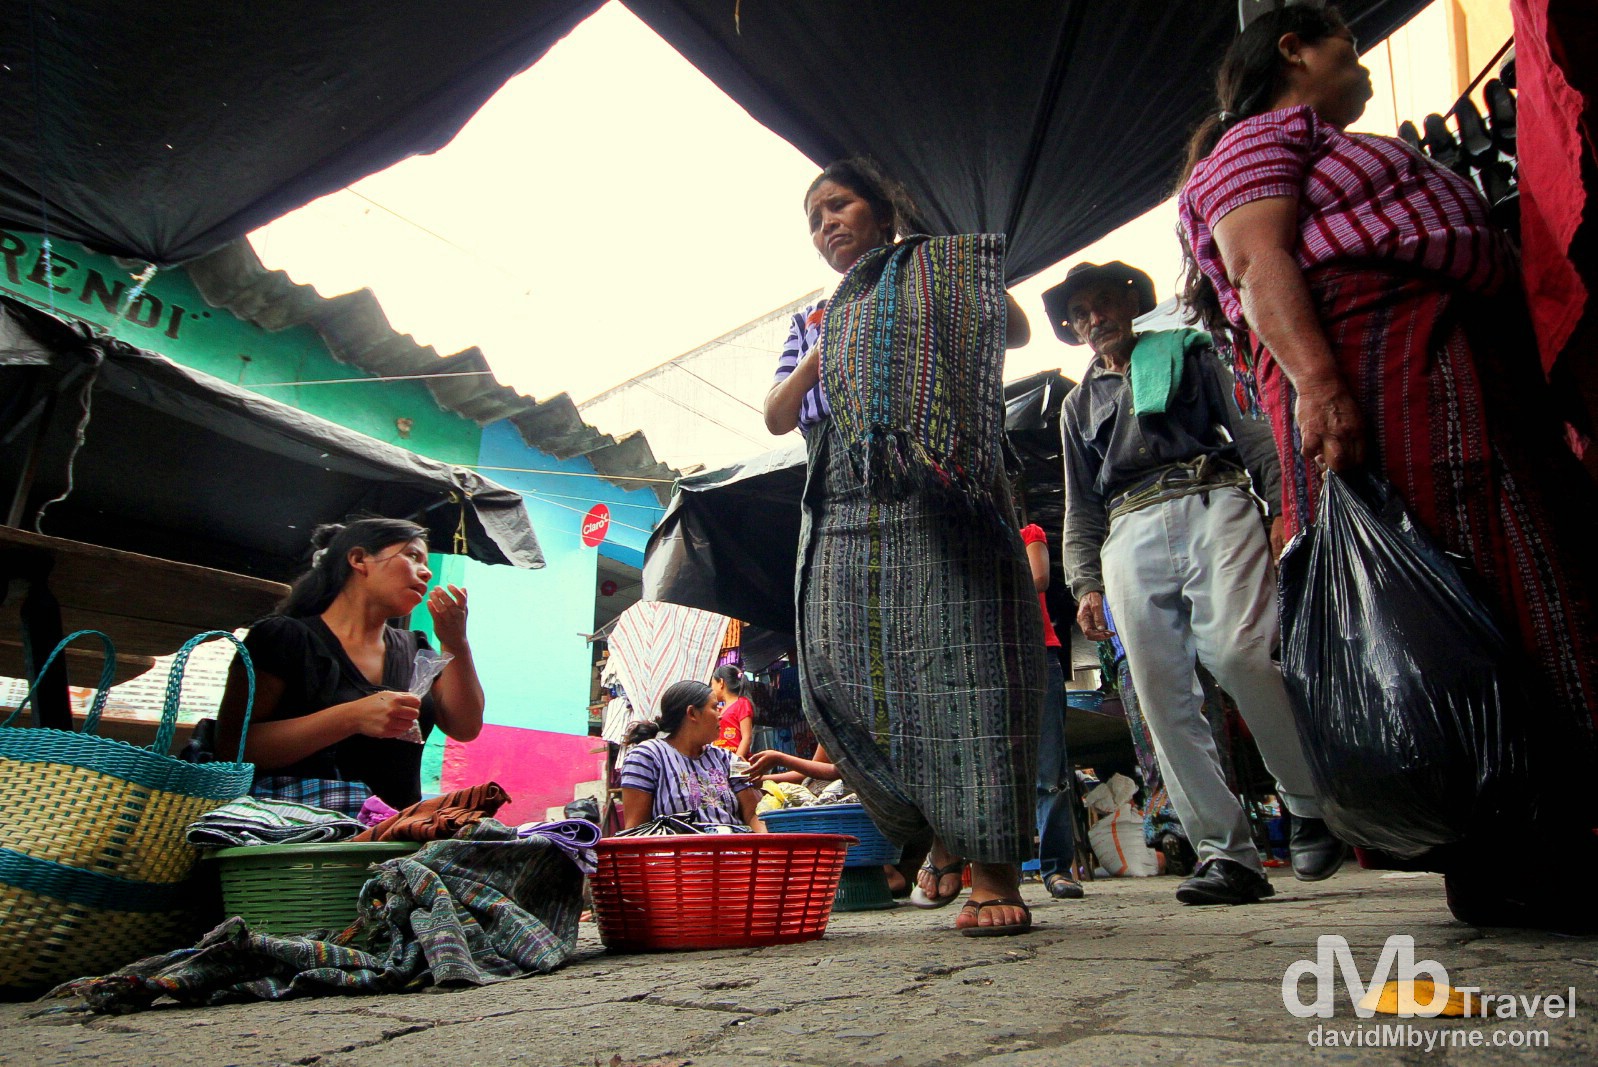 Market day in Santiago Atitlan, Guatemala. May 24th 2013.